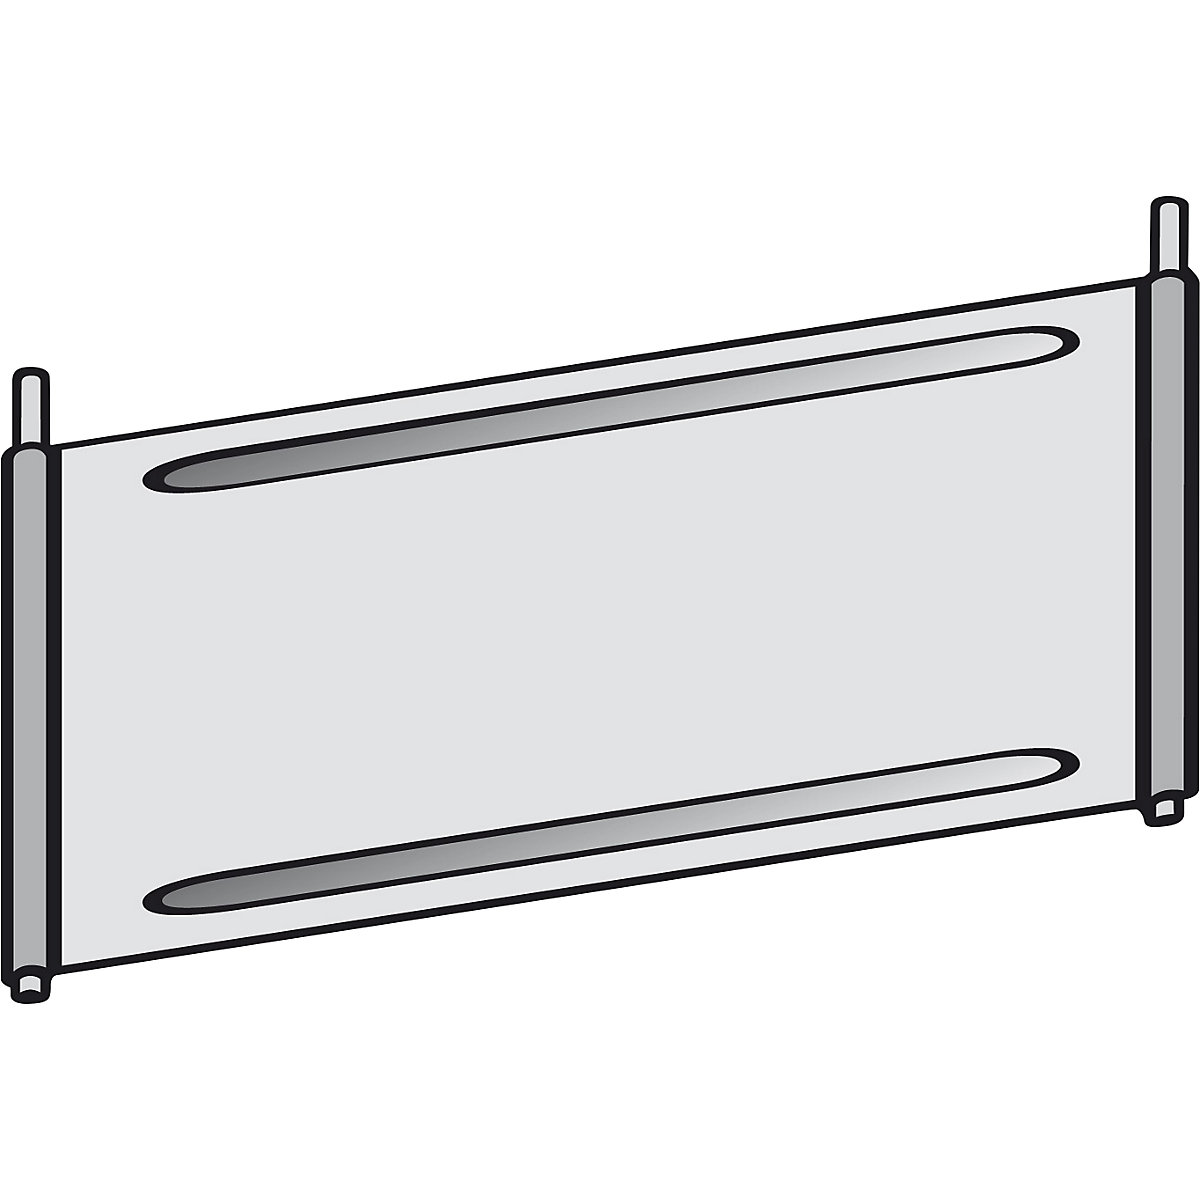 Shelf partition for compartment shelf unit – hofe, zinc-plated, for shelf, WxD 1000 x 300 mm-4